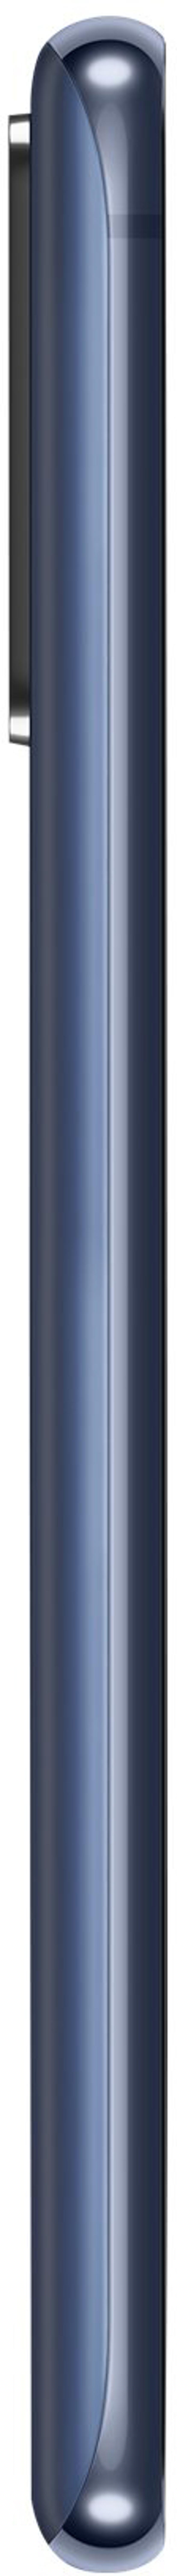 Samsung Galaxy S20 FE 4G 128GB Dual-SIM Blå